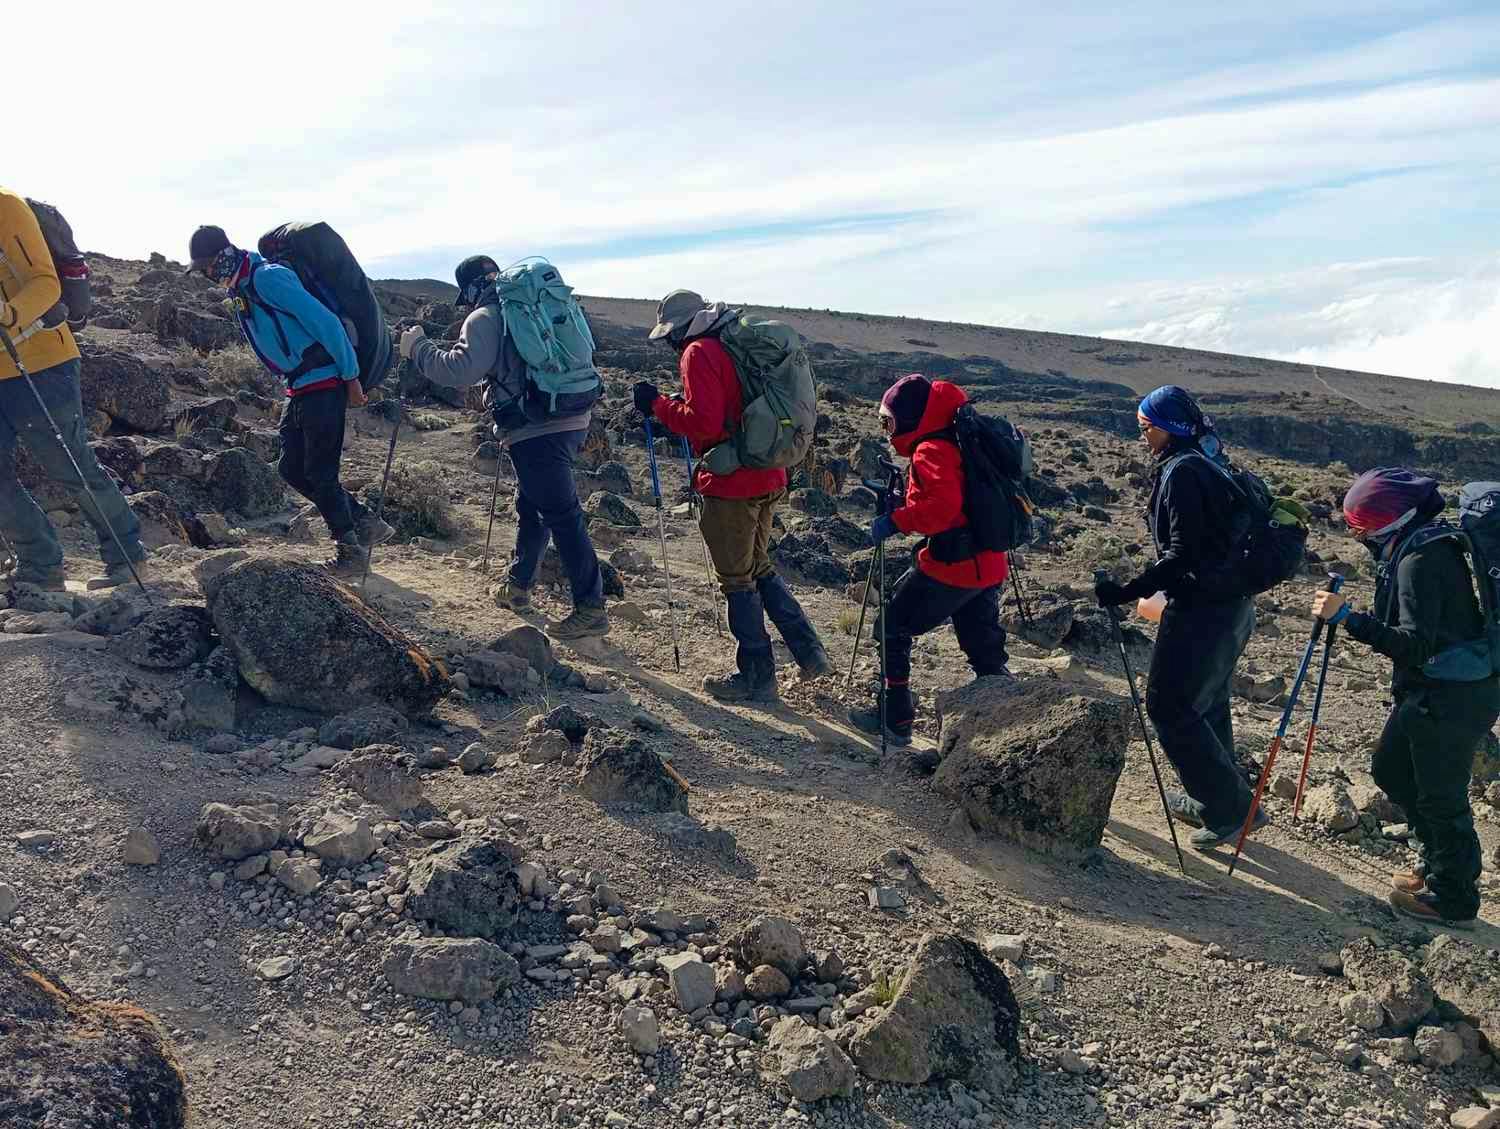 37. Hikers in line barafu